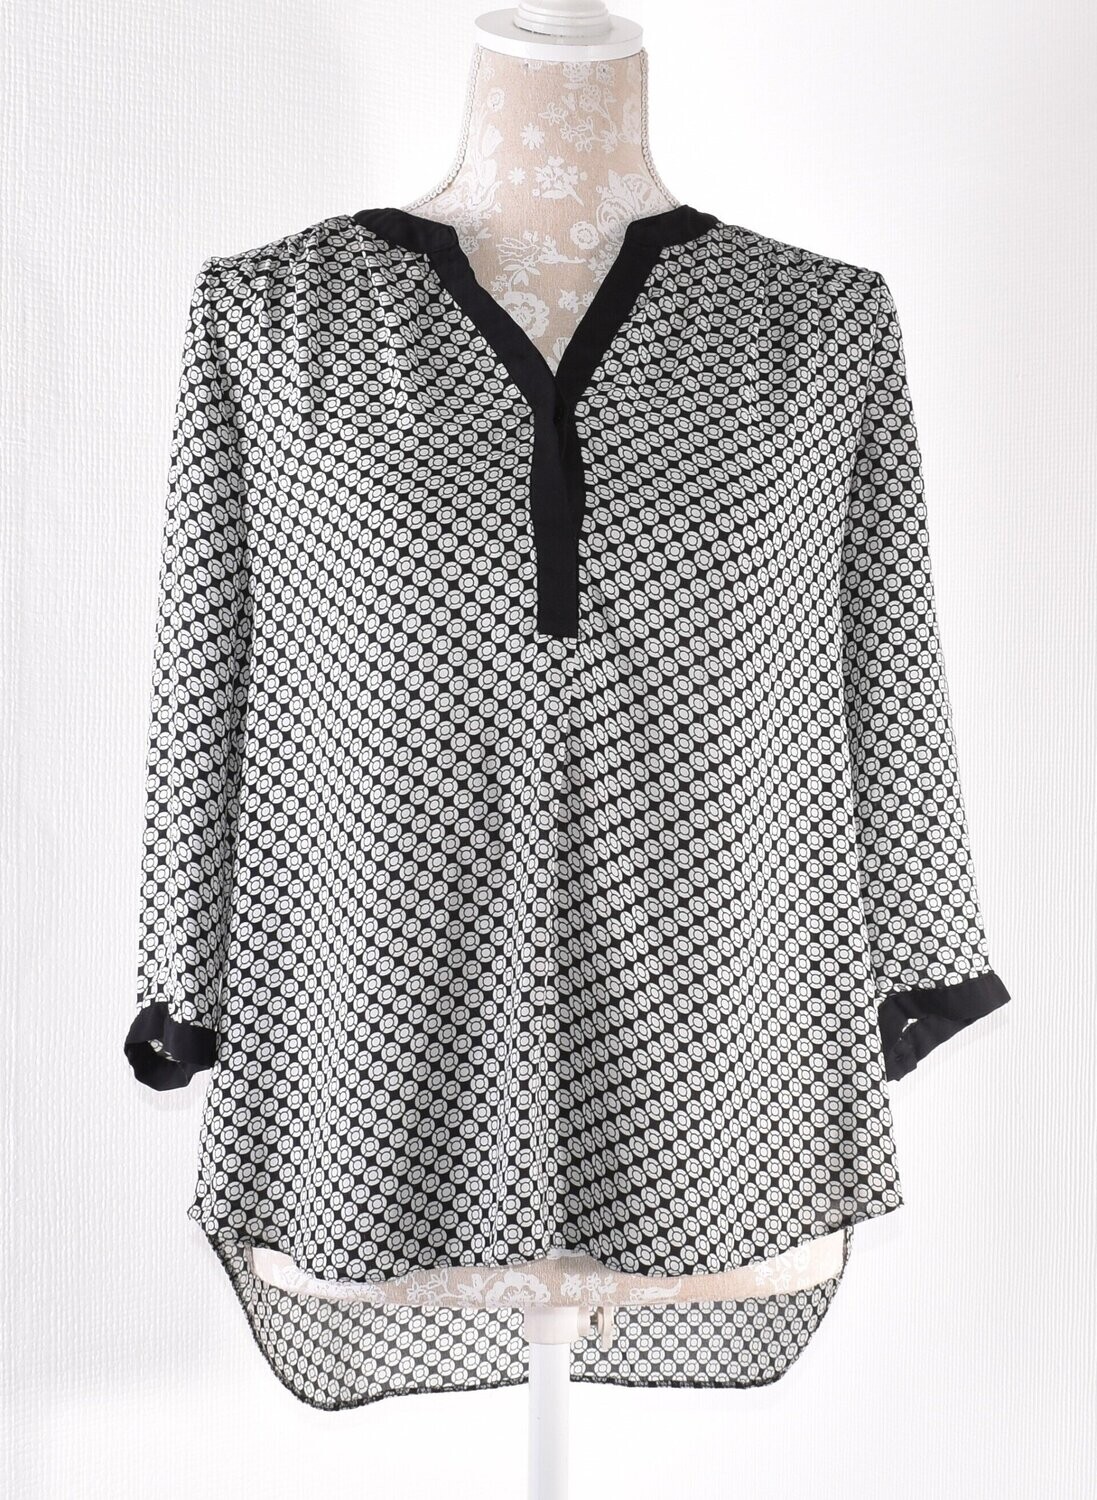 Black & White Geometric Pattern Tunic Blouse by Debenhams Petite Collection